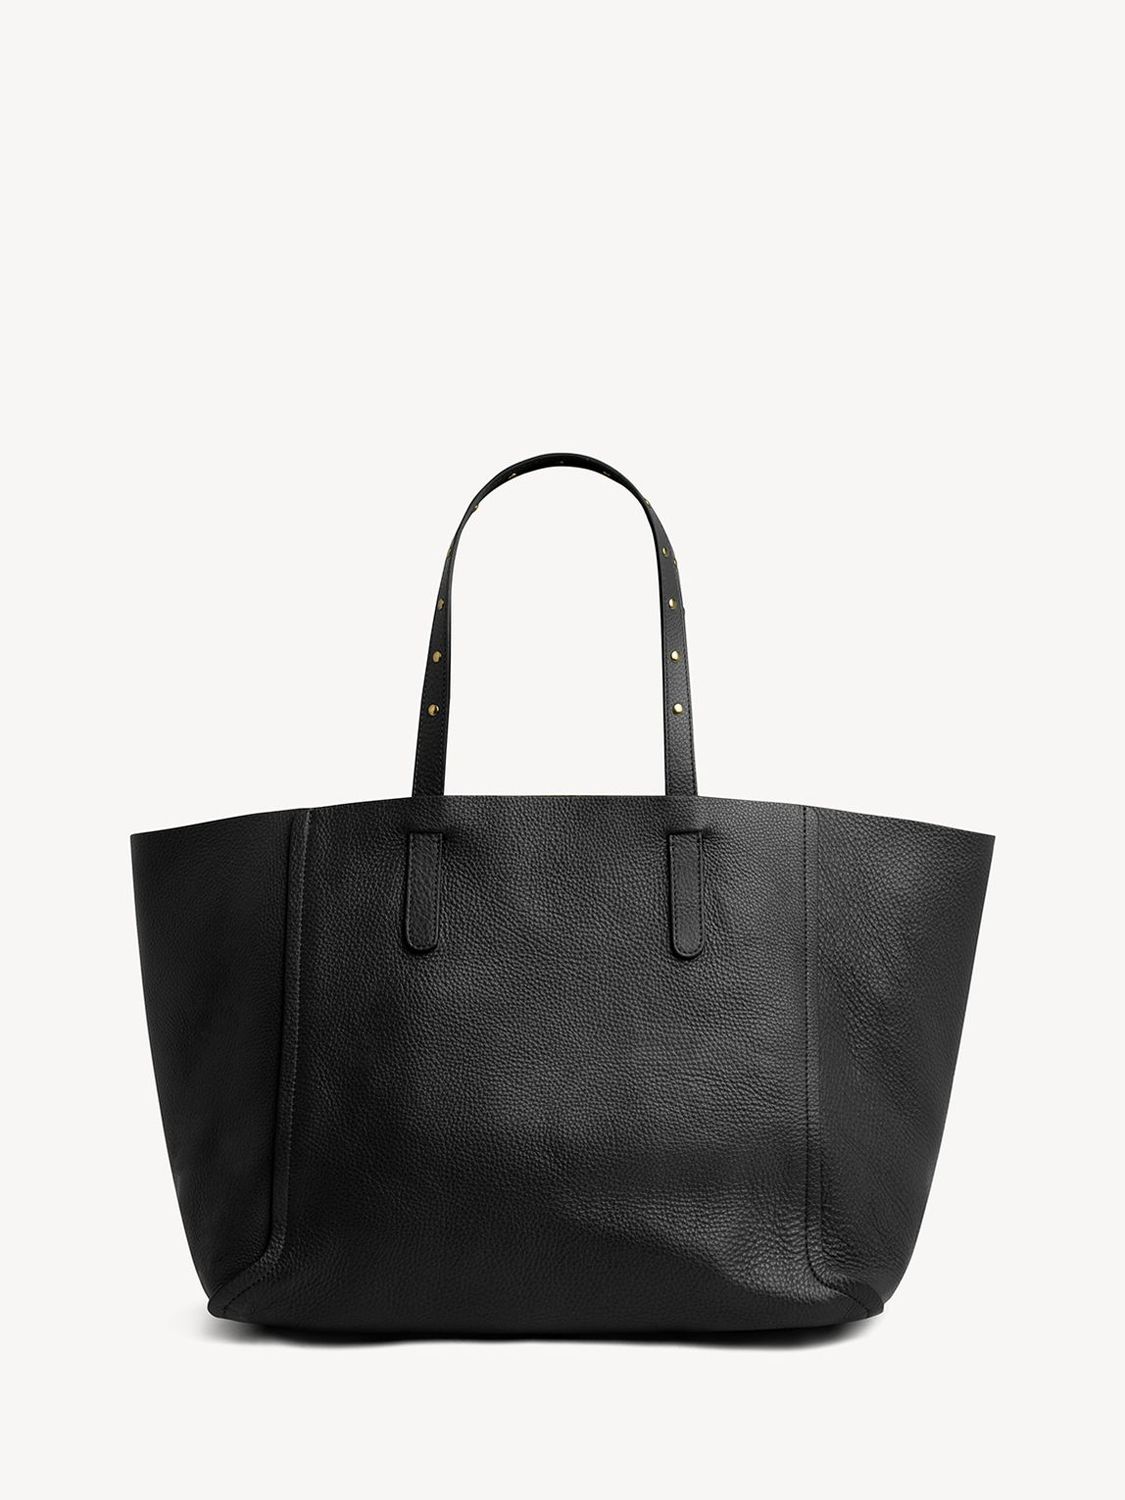 Gerard Darel Simple 2 Leather Shopper Bag, Black/Gold at John Lewis ...